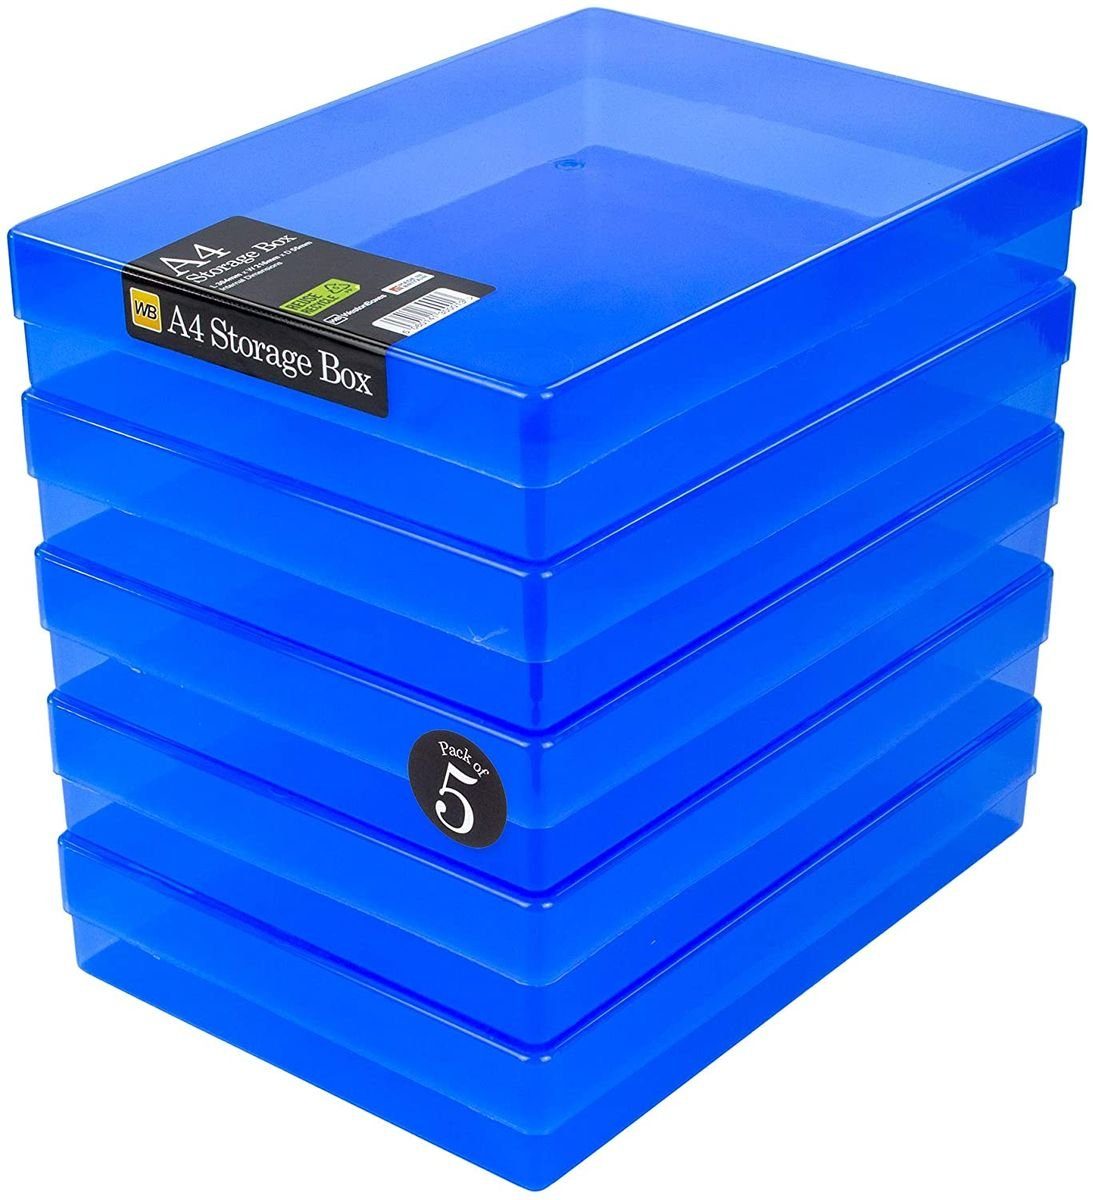 WestonBoxes Aufbewahrungsbox Variocolors A4 Aufbewahrungsbox blau transparent 312x225x57mm (10 St)